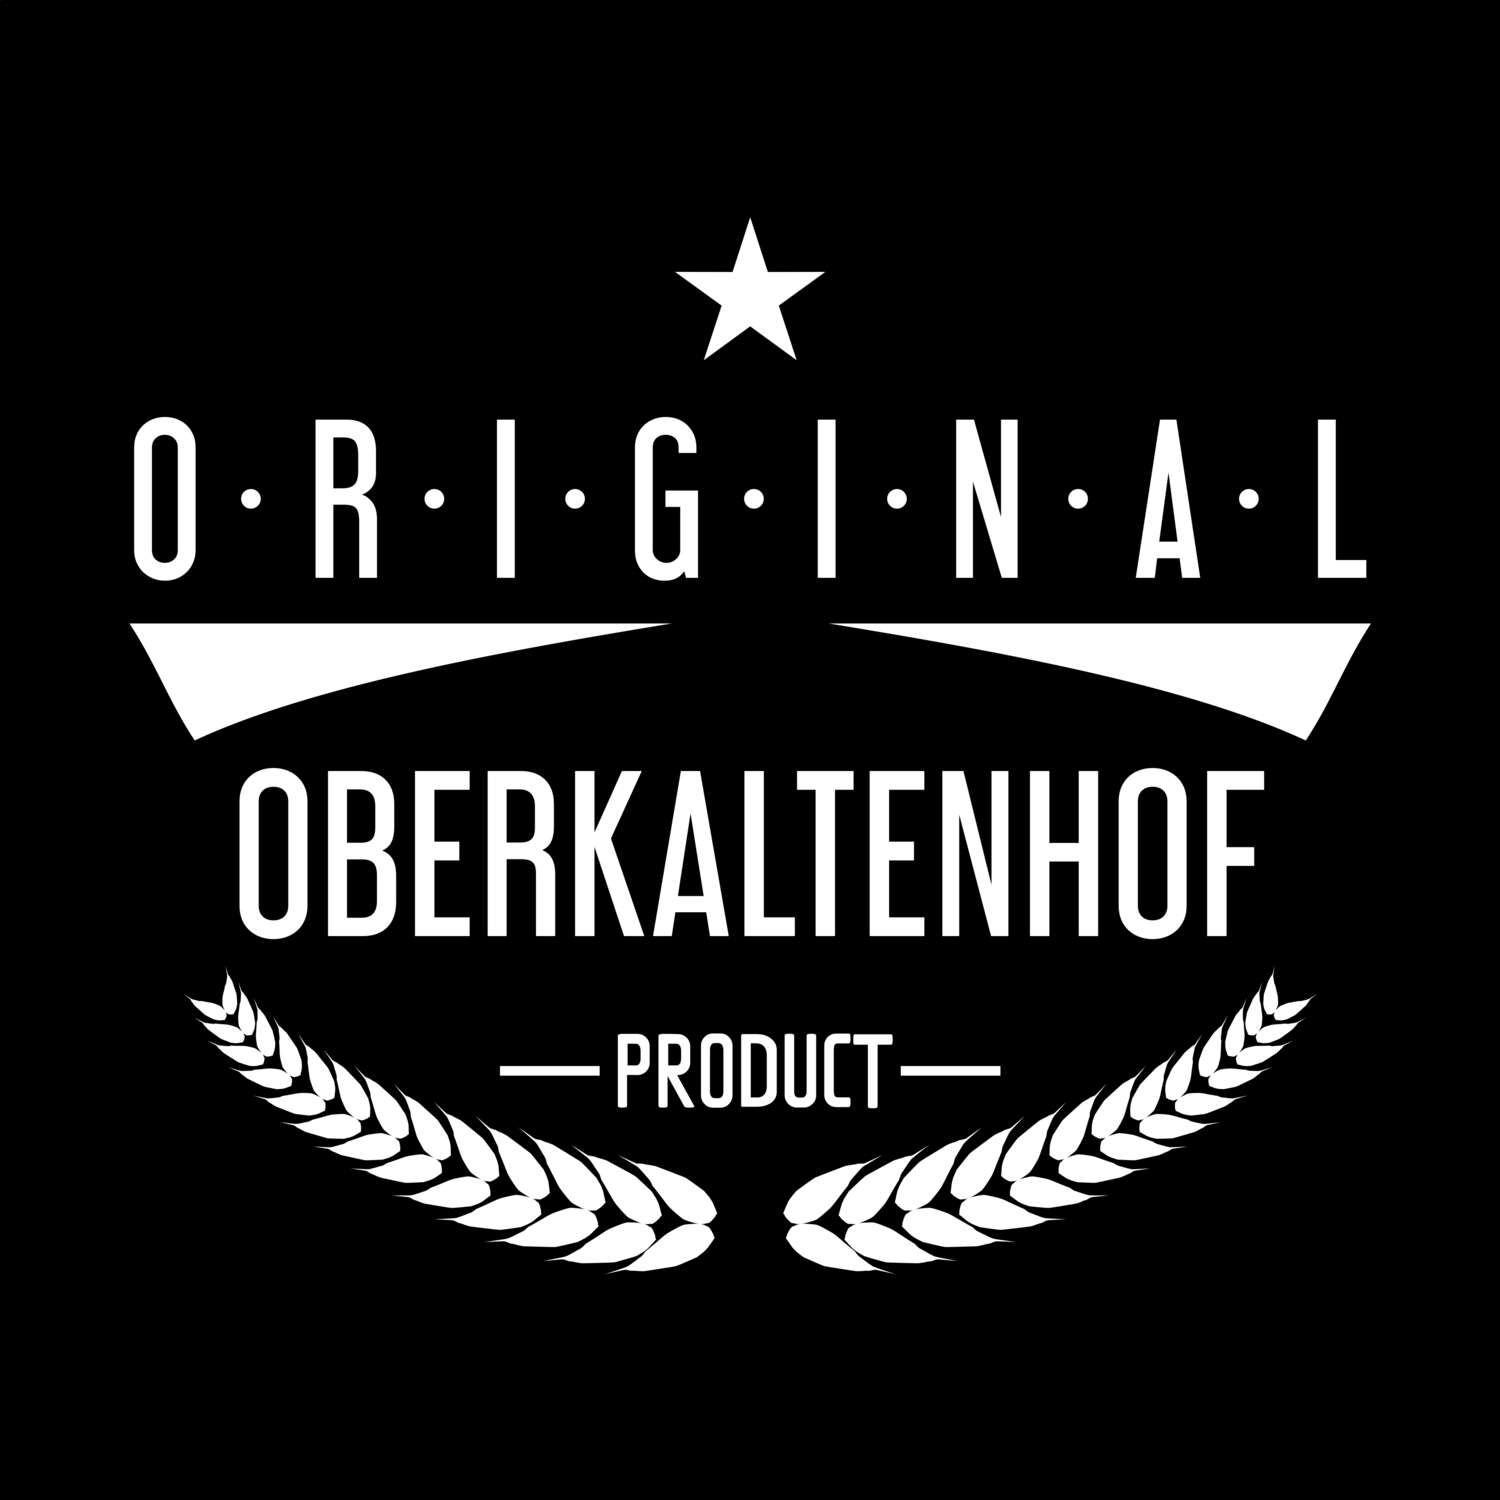 Oberkaltenhof T-Shirt »Original Product«